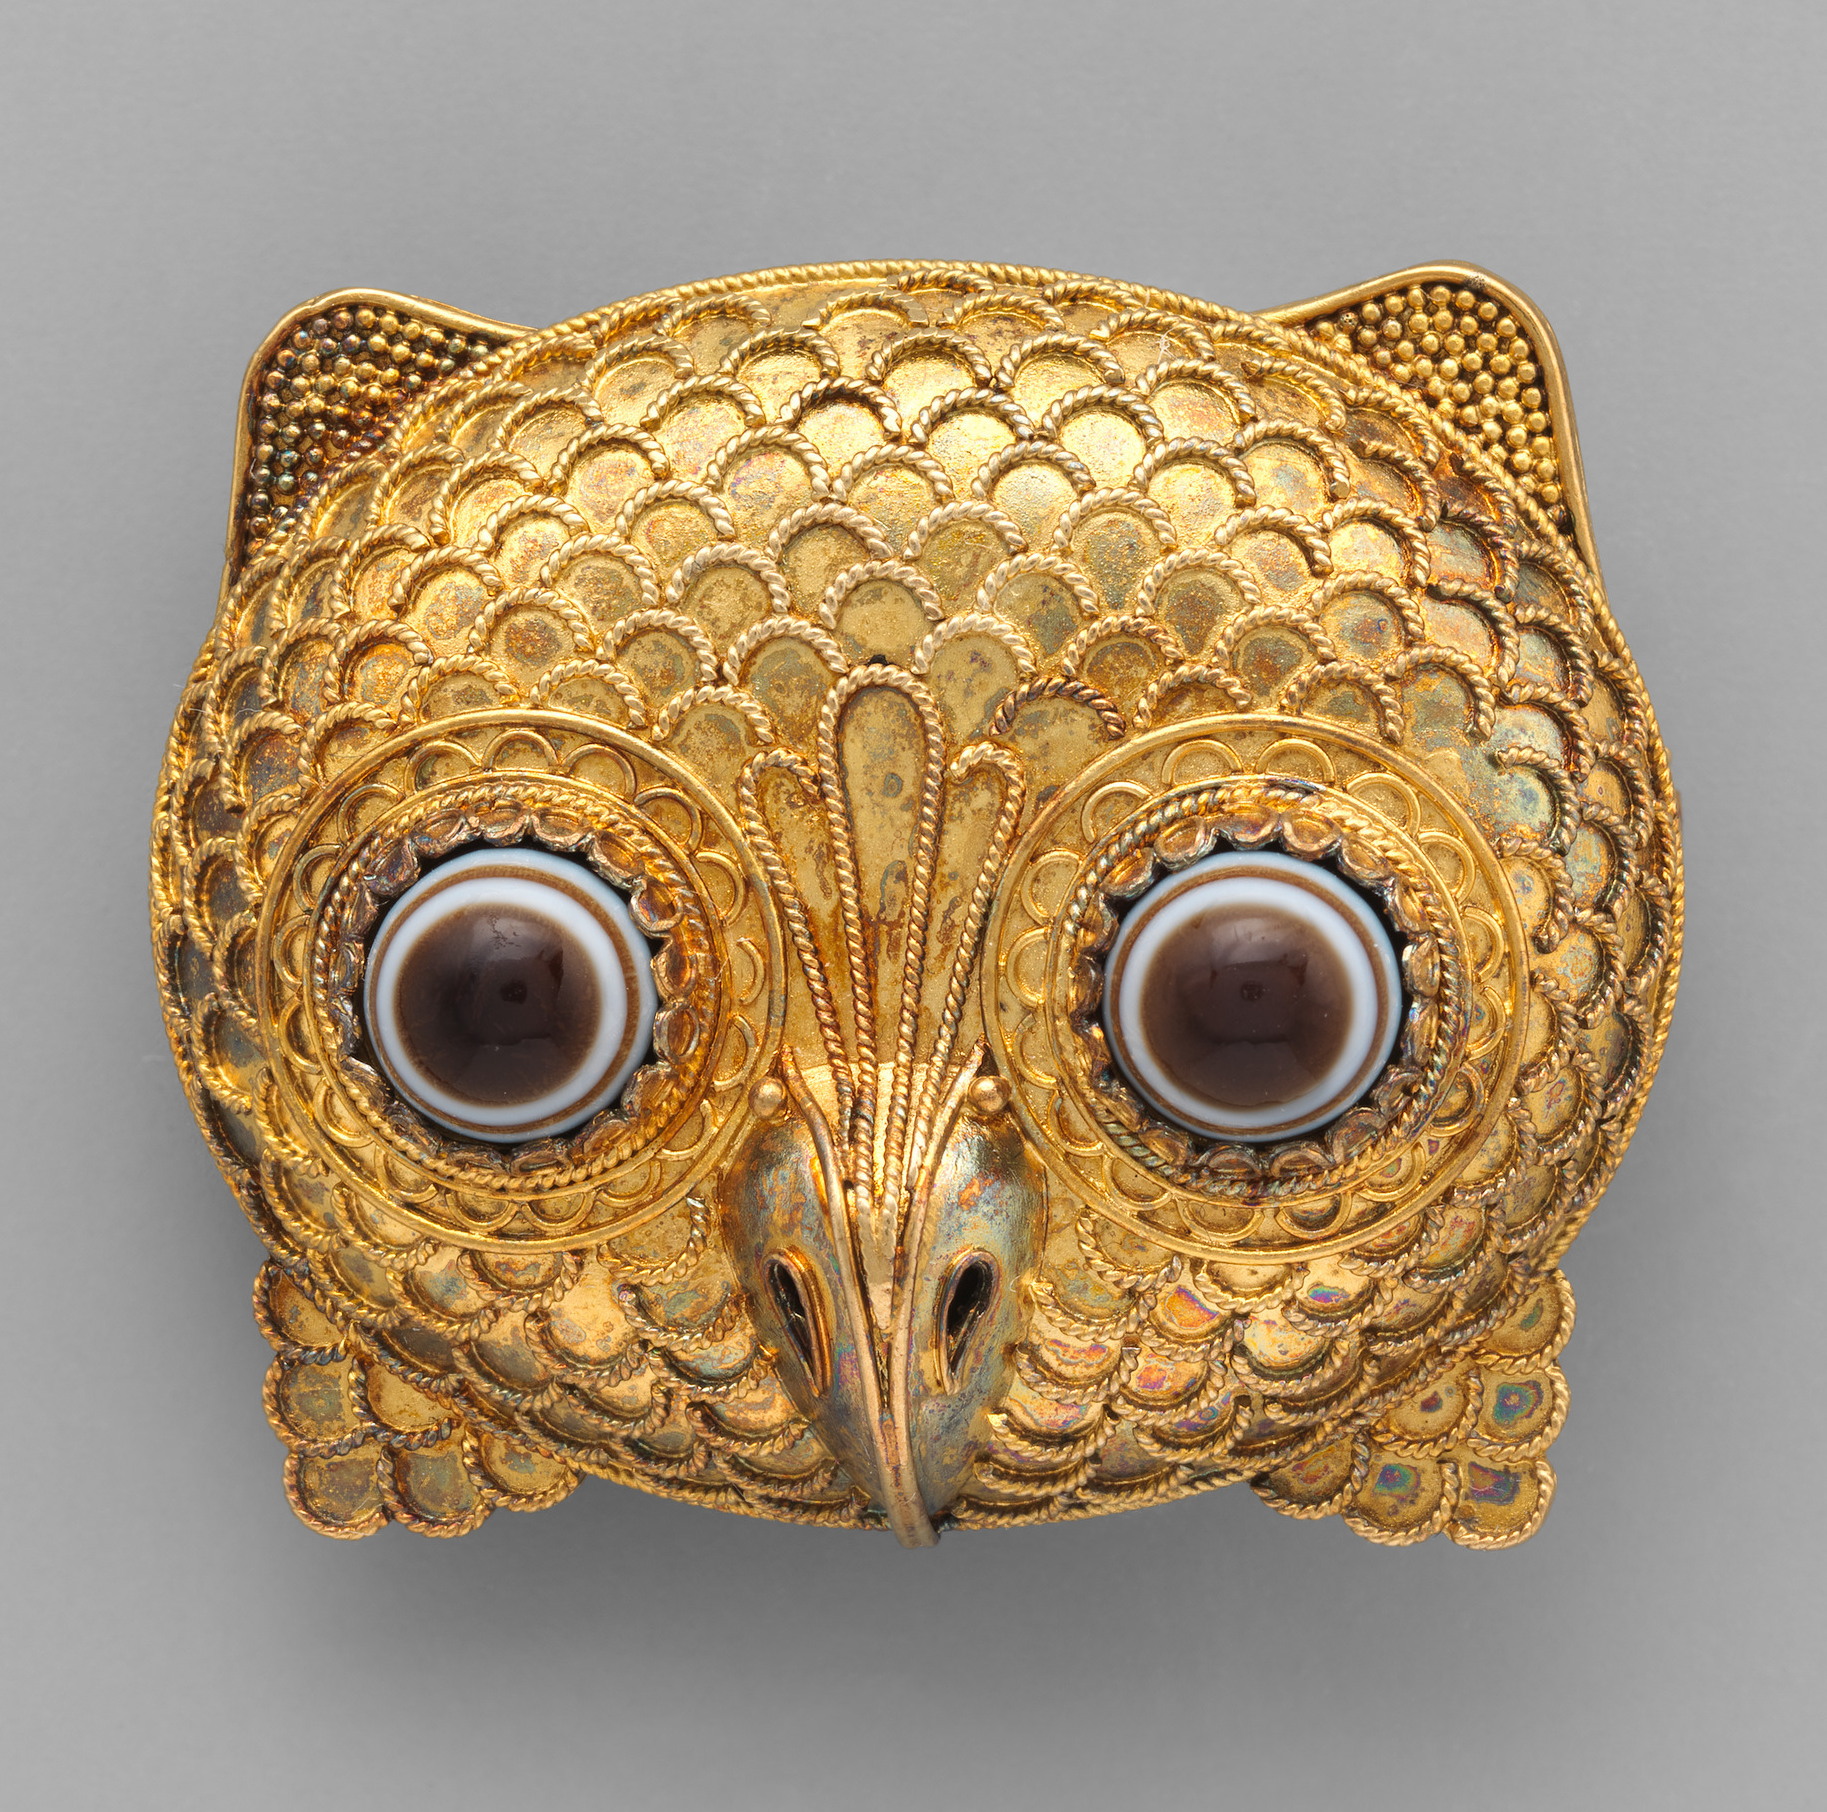 Owl head brooch, made by Castellani, 1860. Metropolitan Museum of Art.